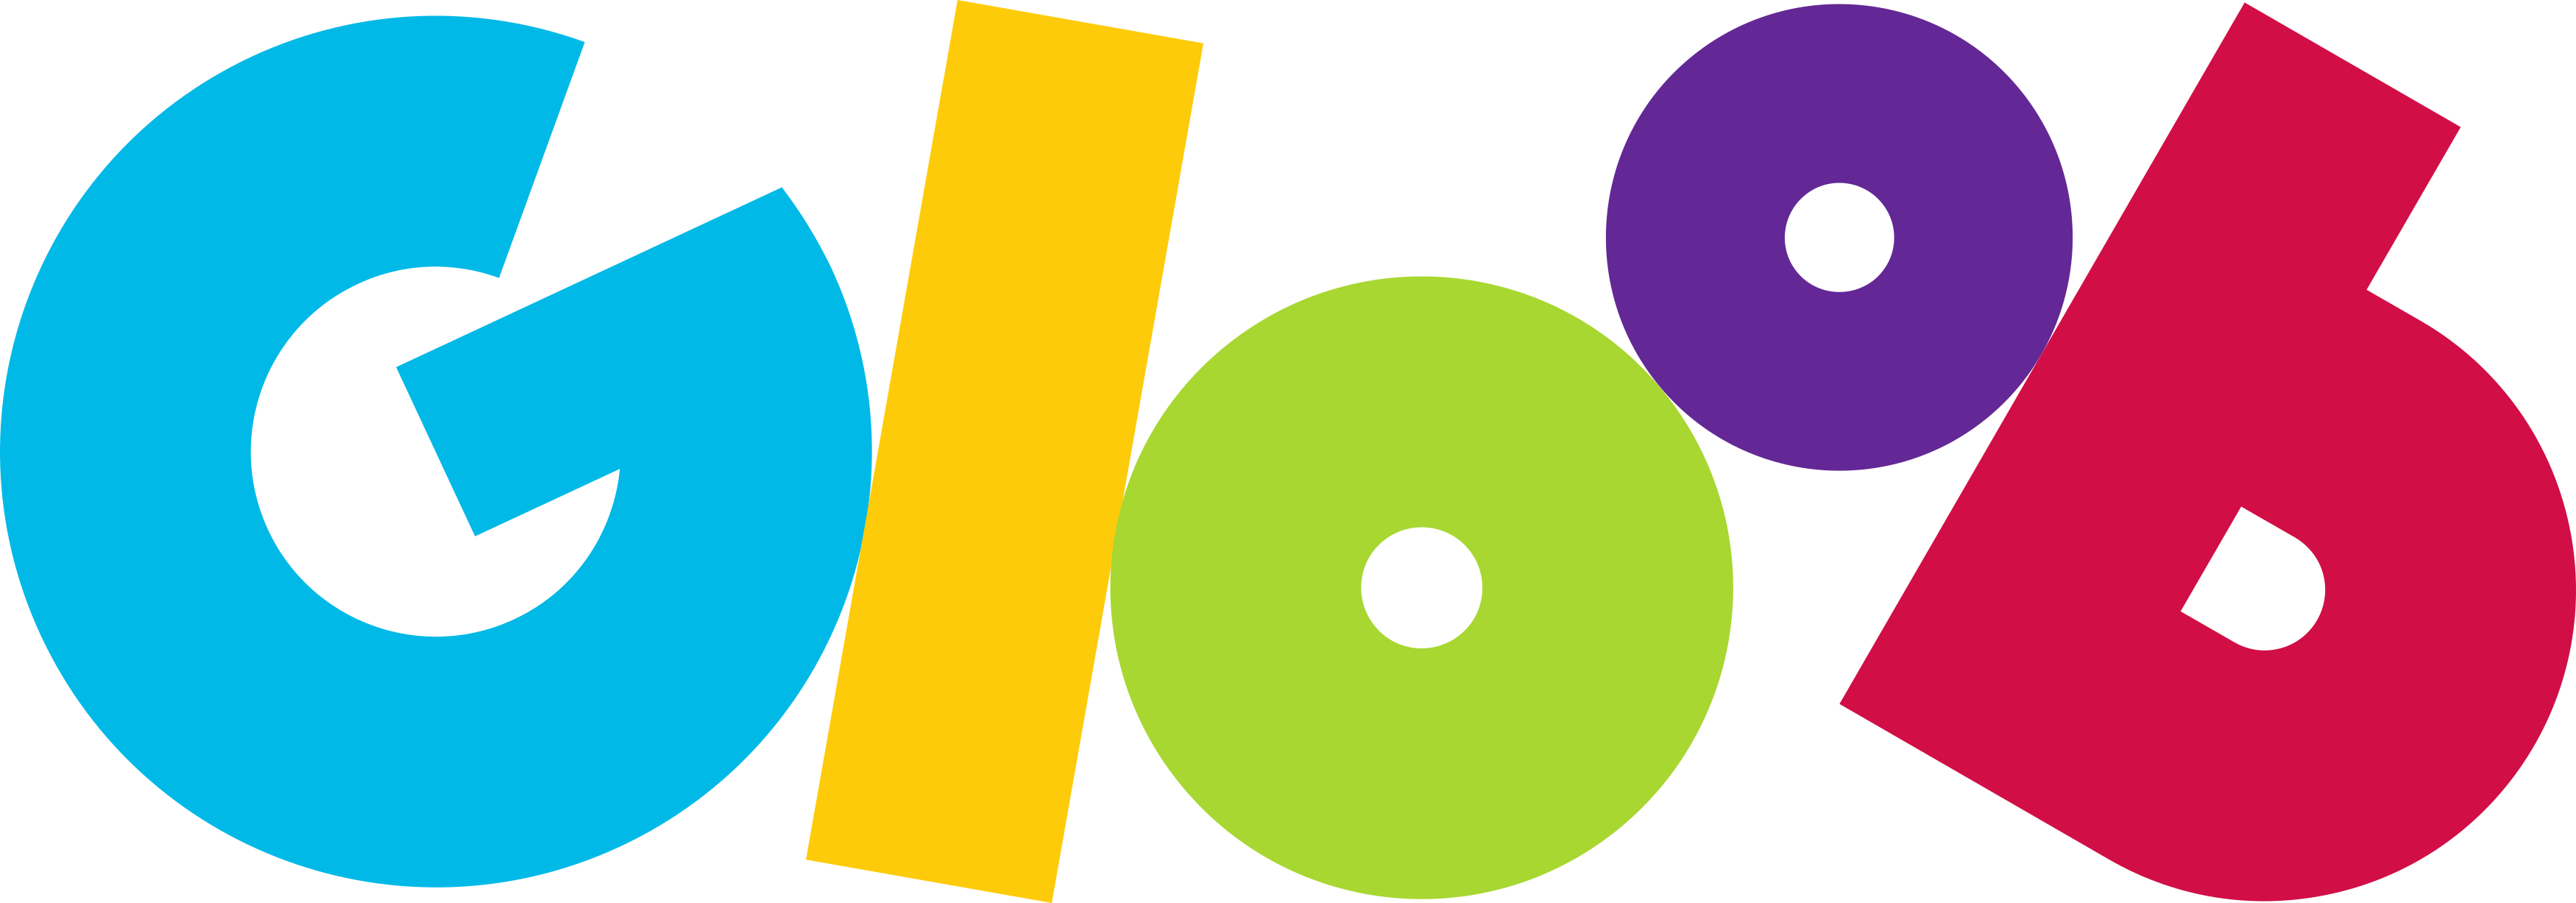 Canal Gloob Logo.